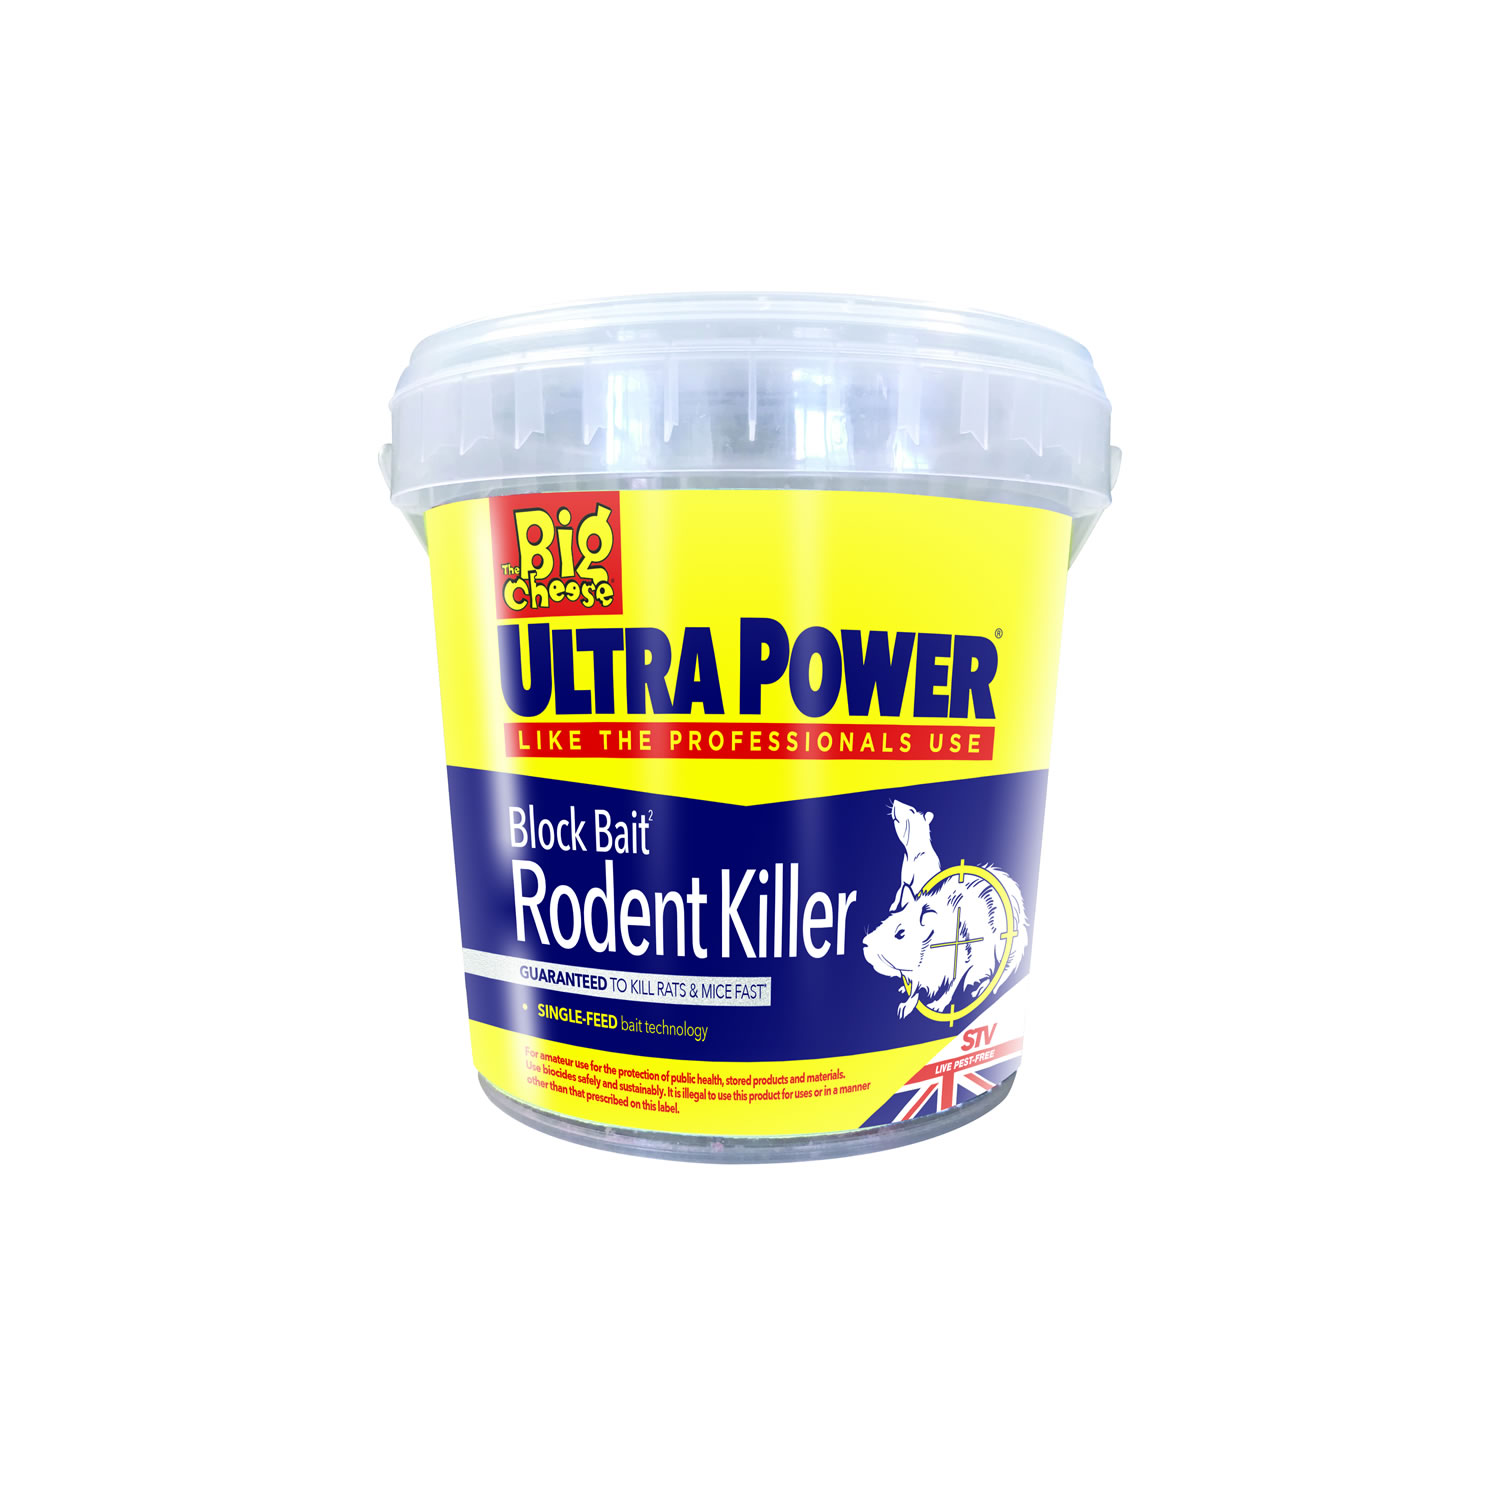 THE BIG CHEESE ULTRA POWER BLOCK BAIT RODENT KILLER 15 X 20 GM